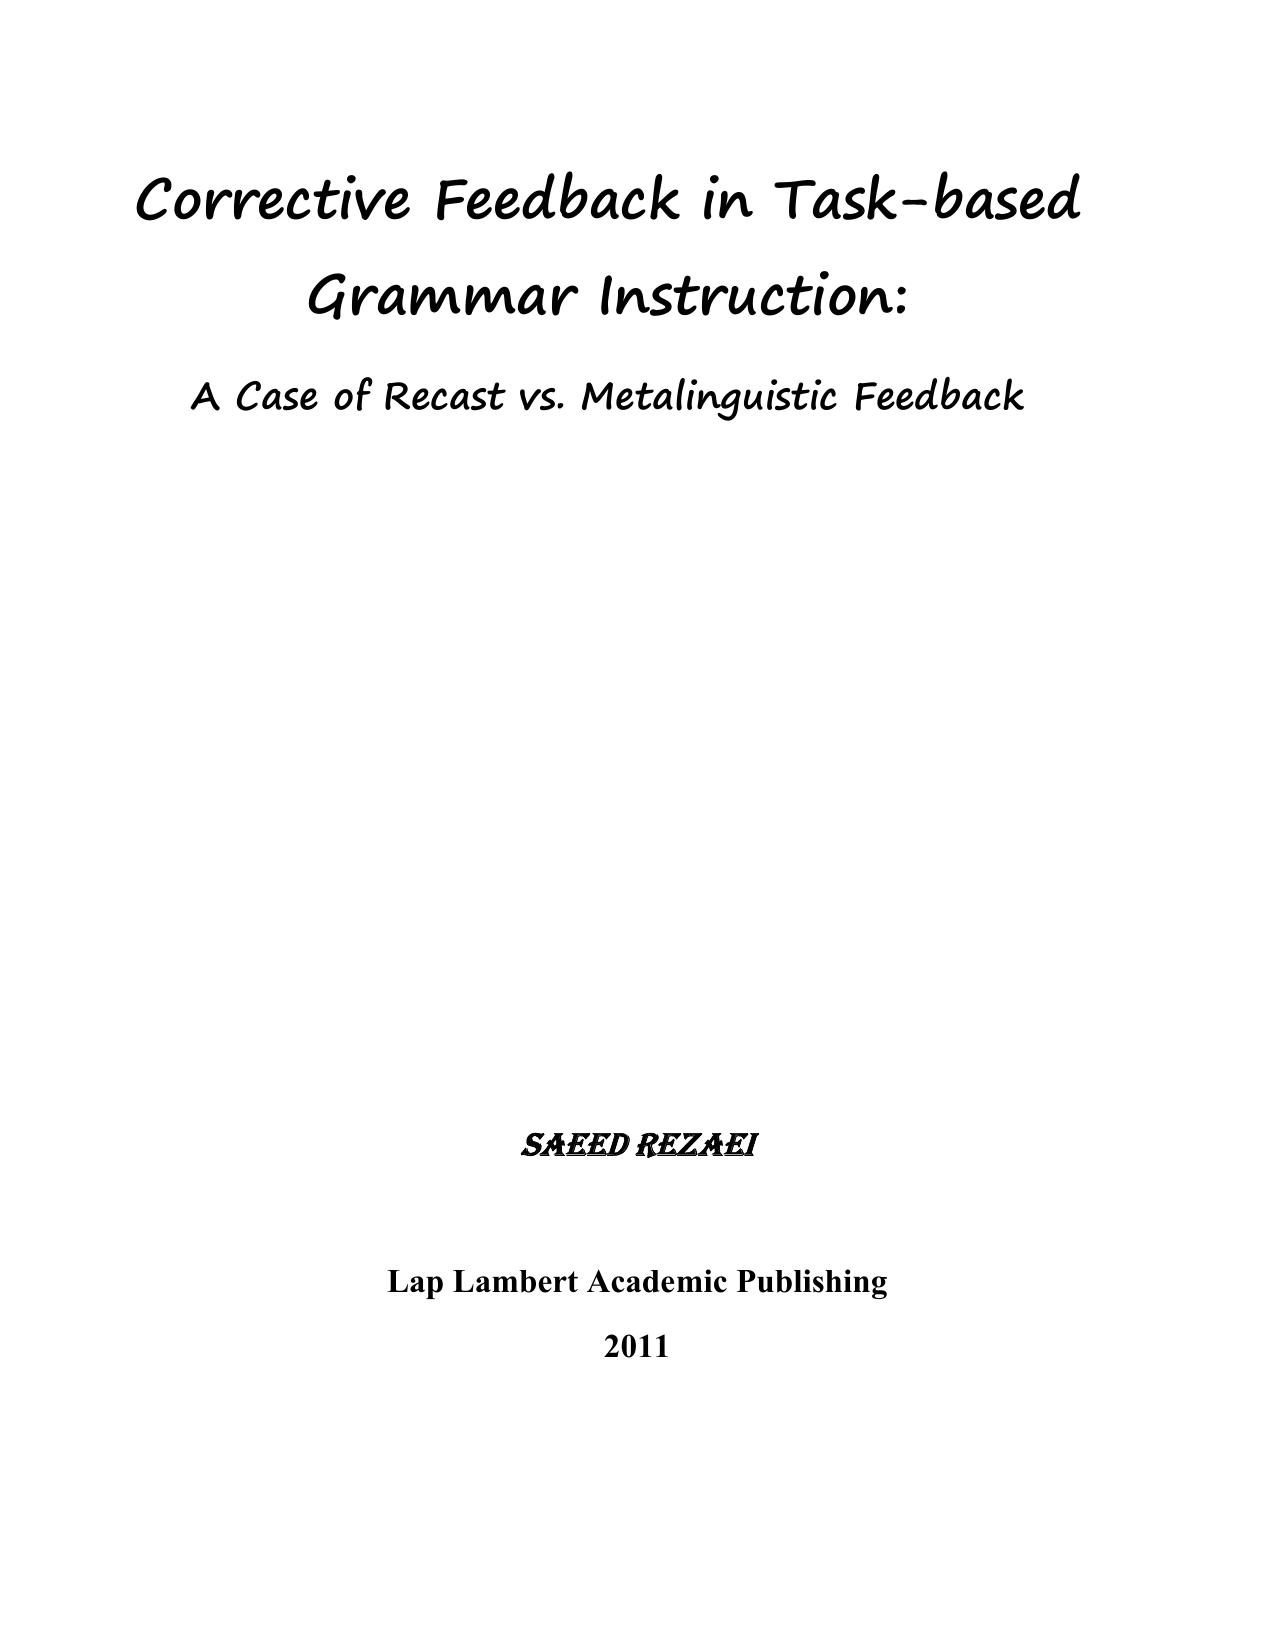 Corrective Feedback in Task-based Grammar Instruction  A Case of Recast vs. Metalinguistic Feedback(2011)